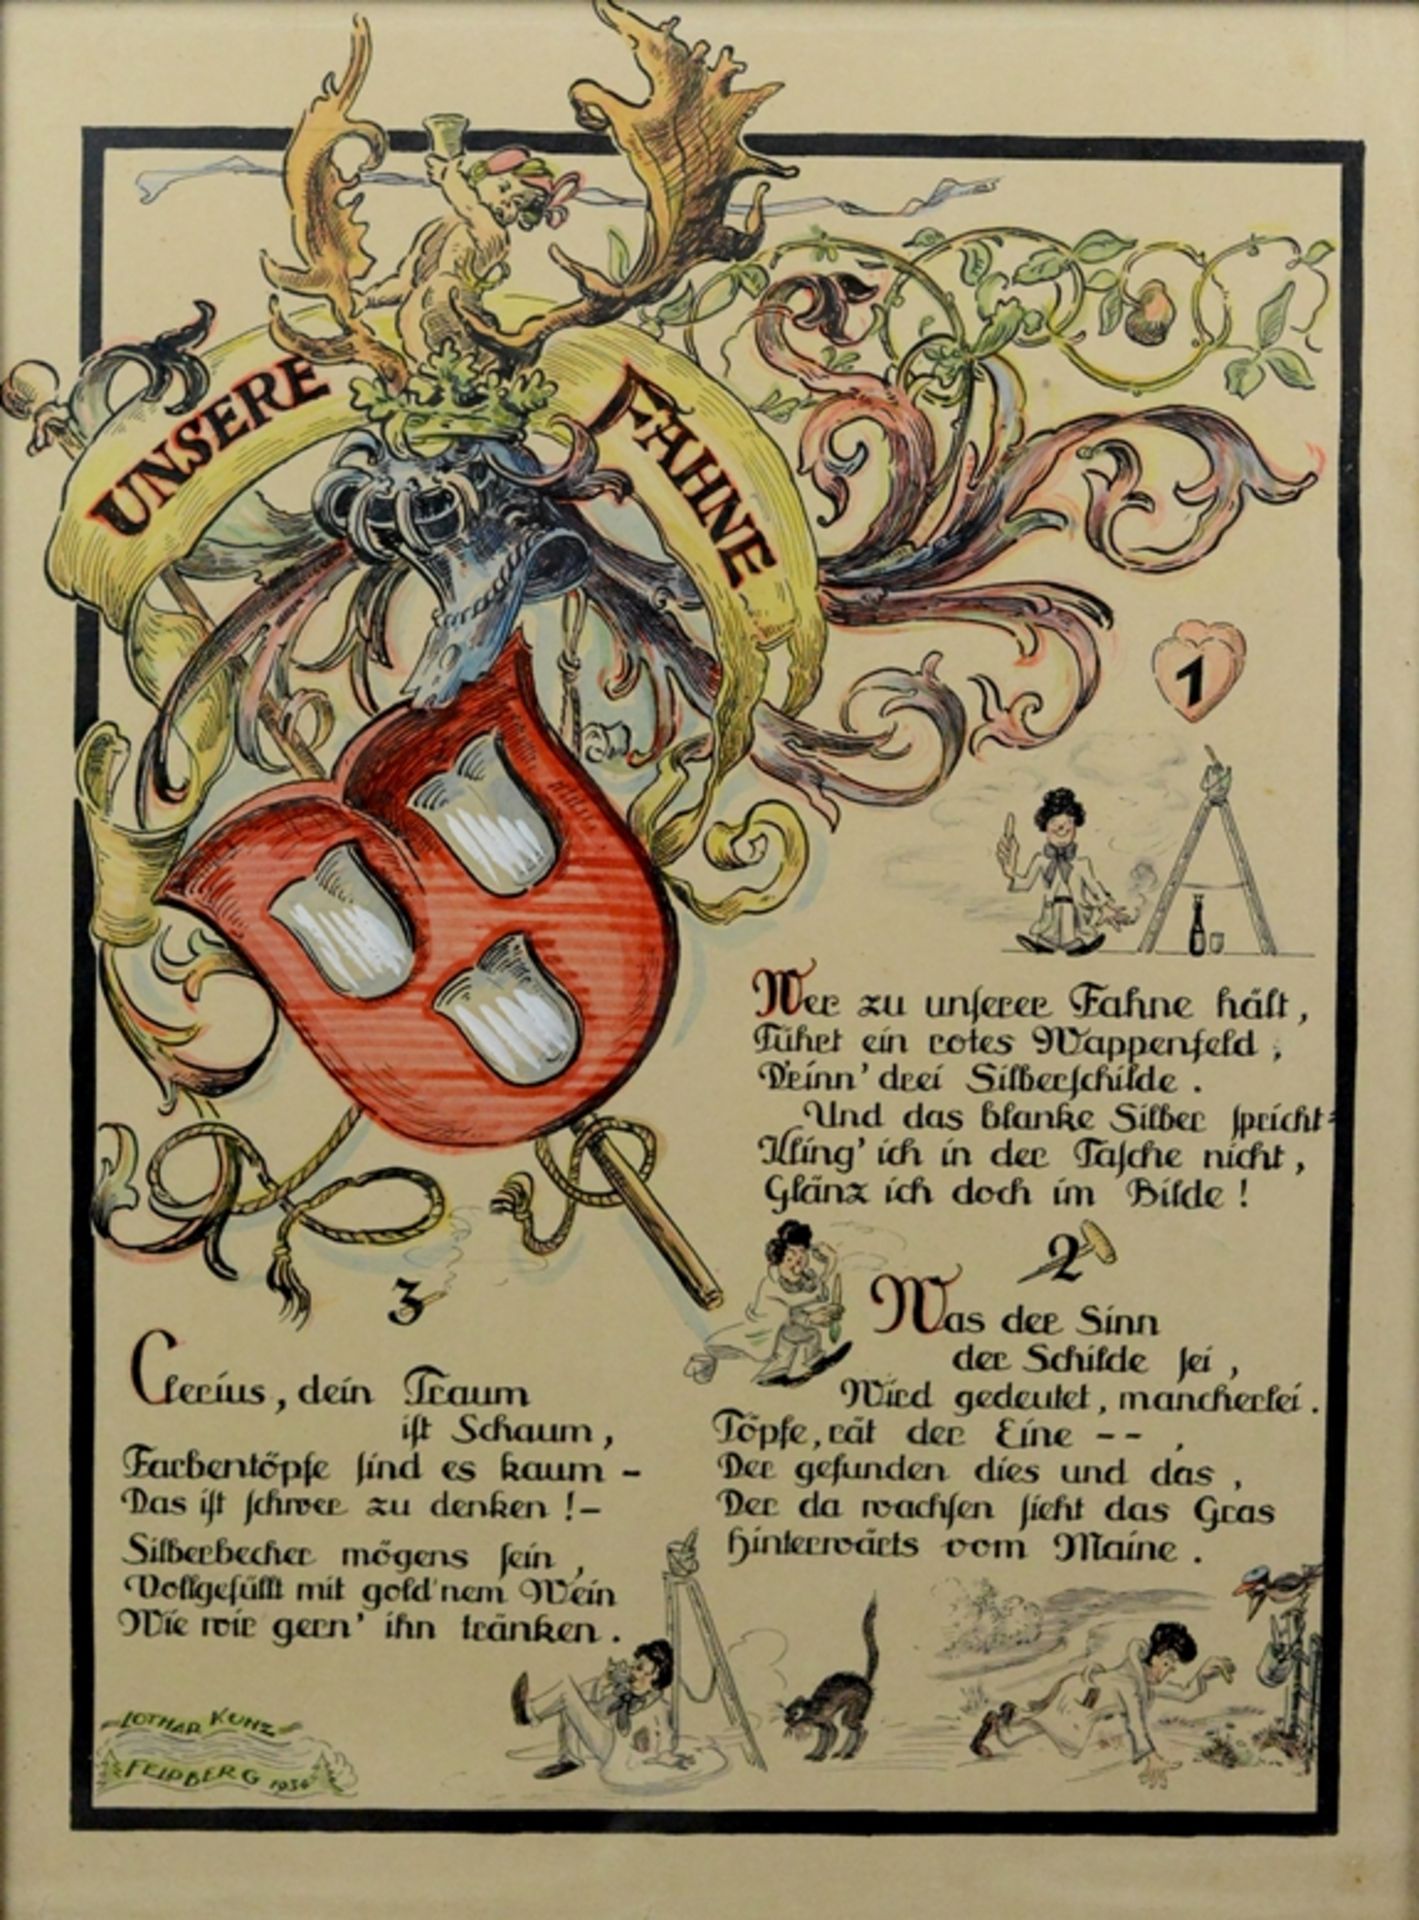 Kunz, Lothar (20. Jahrhundert), "Unsere Fahne", imposantes Wappen, Kalligraphie, teilkoloriert, lin